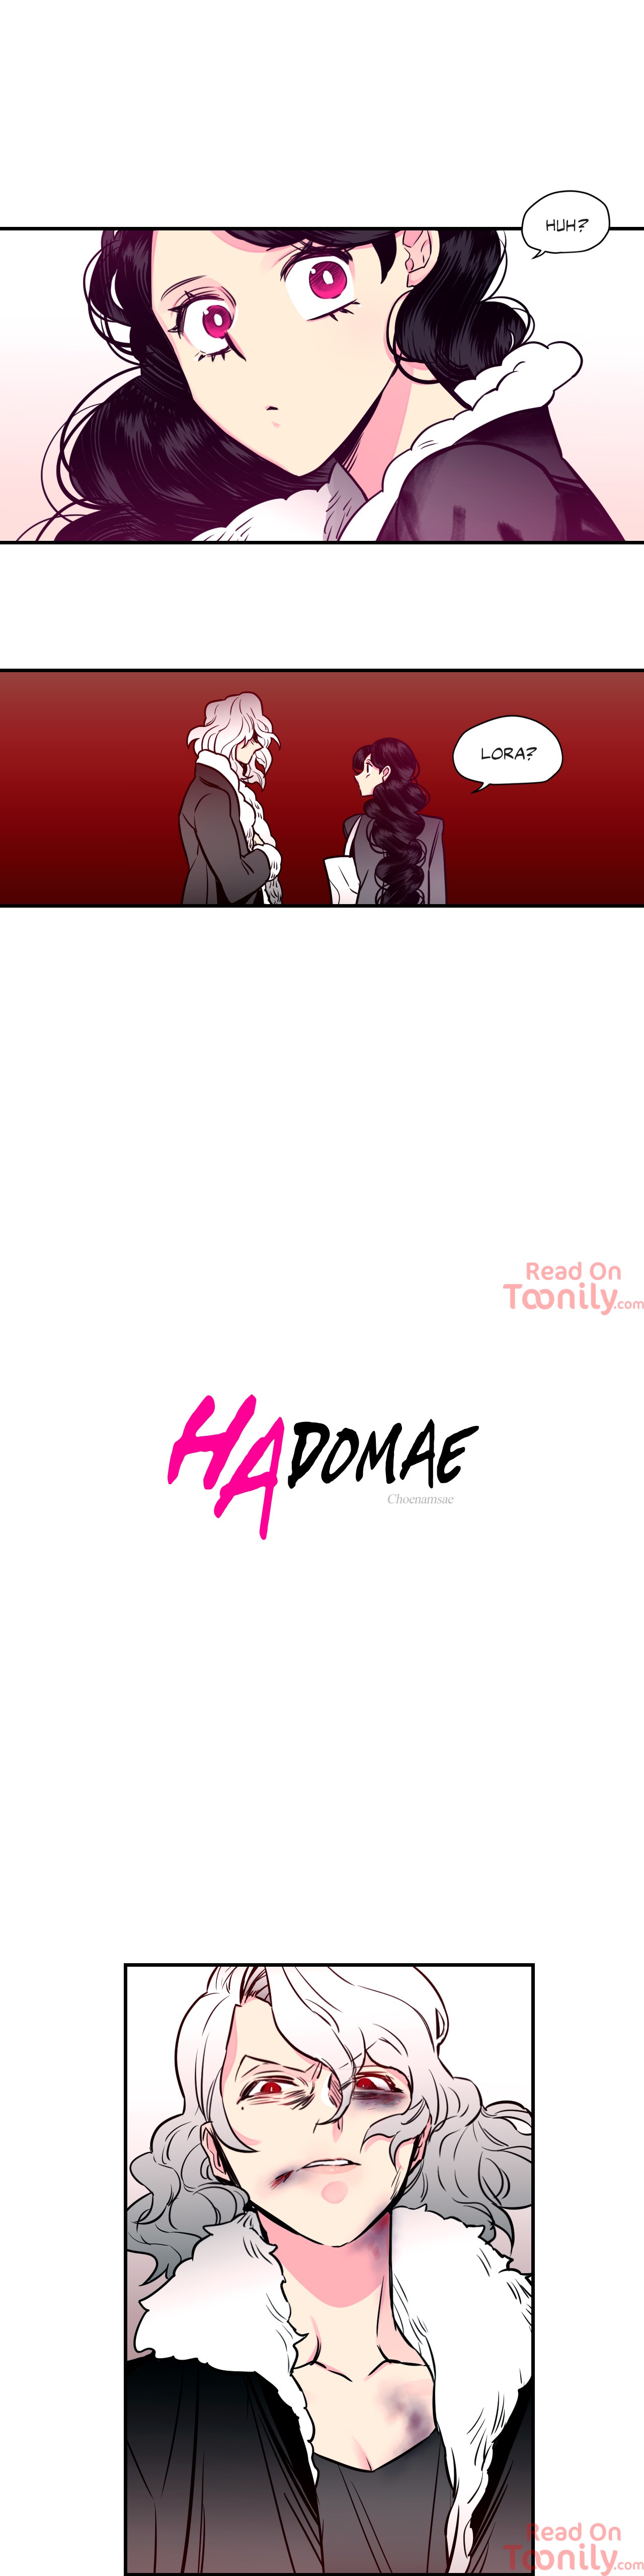 Hadomae image